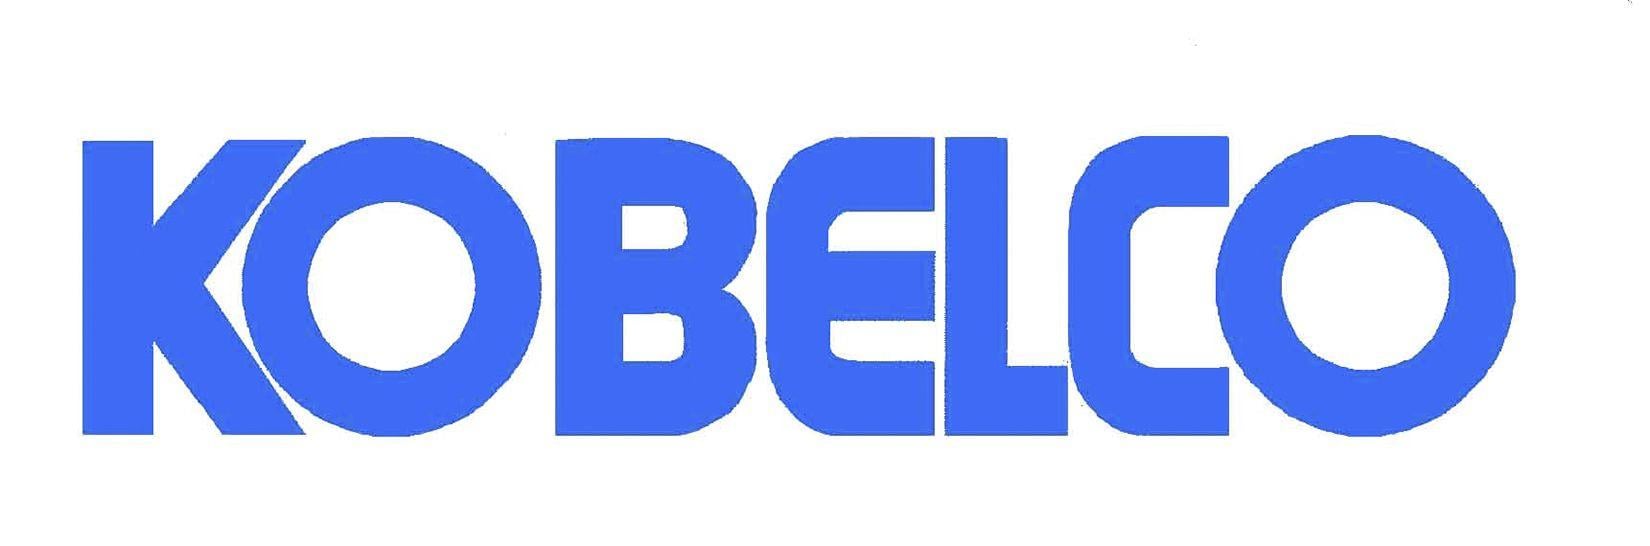 Kobelco Logo - KOBELCO Construction Machinery And KOBELCO Cranes To Merge 02